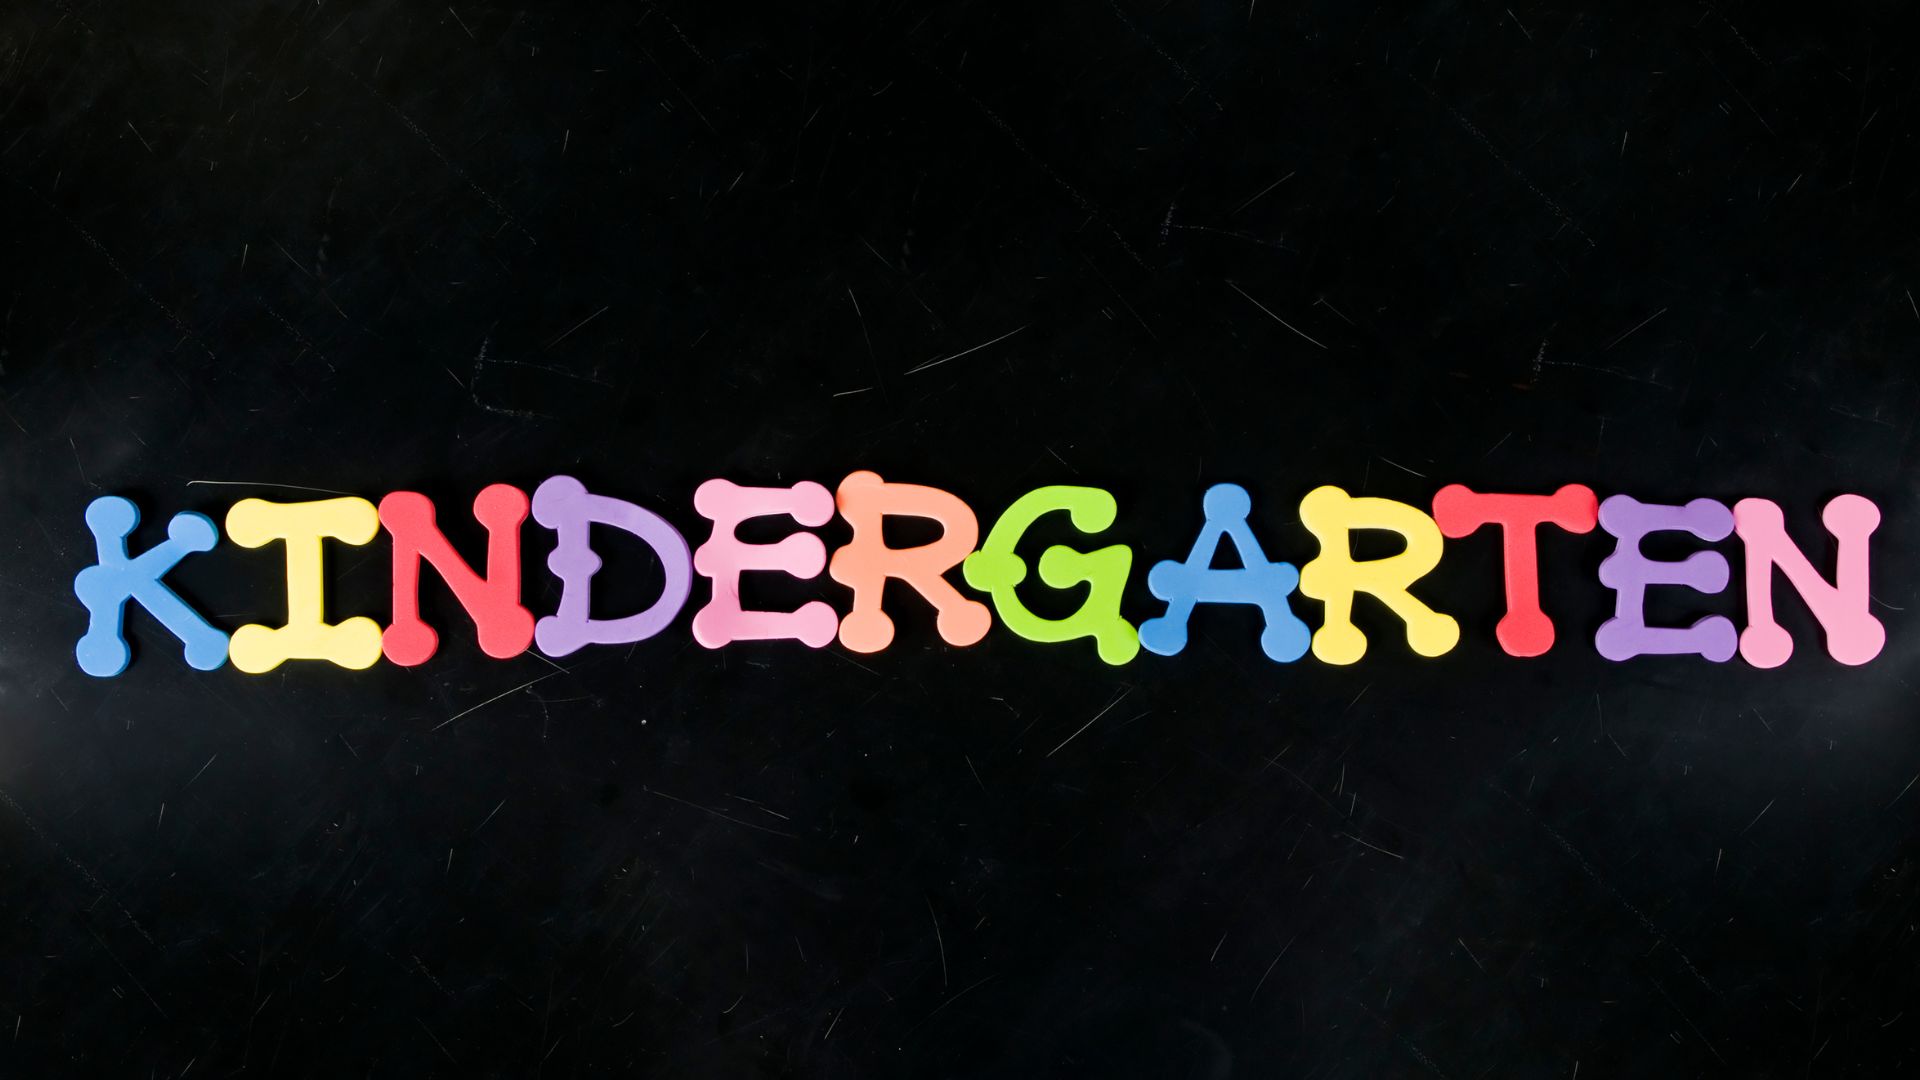 "kindergarten" spelled with knobby foam letters